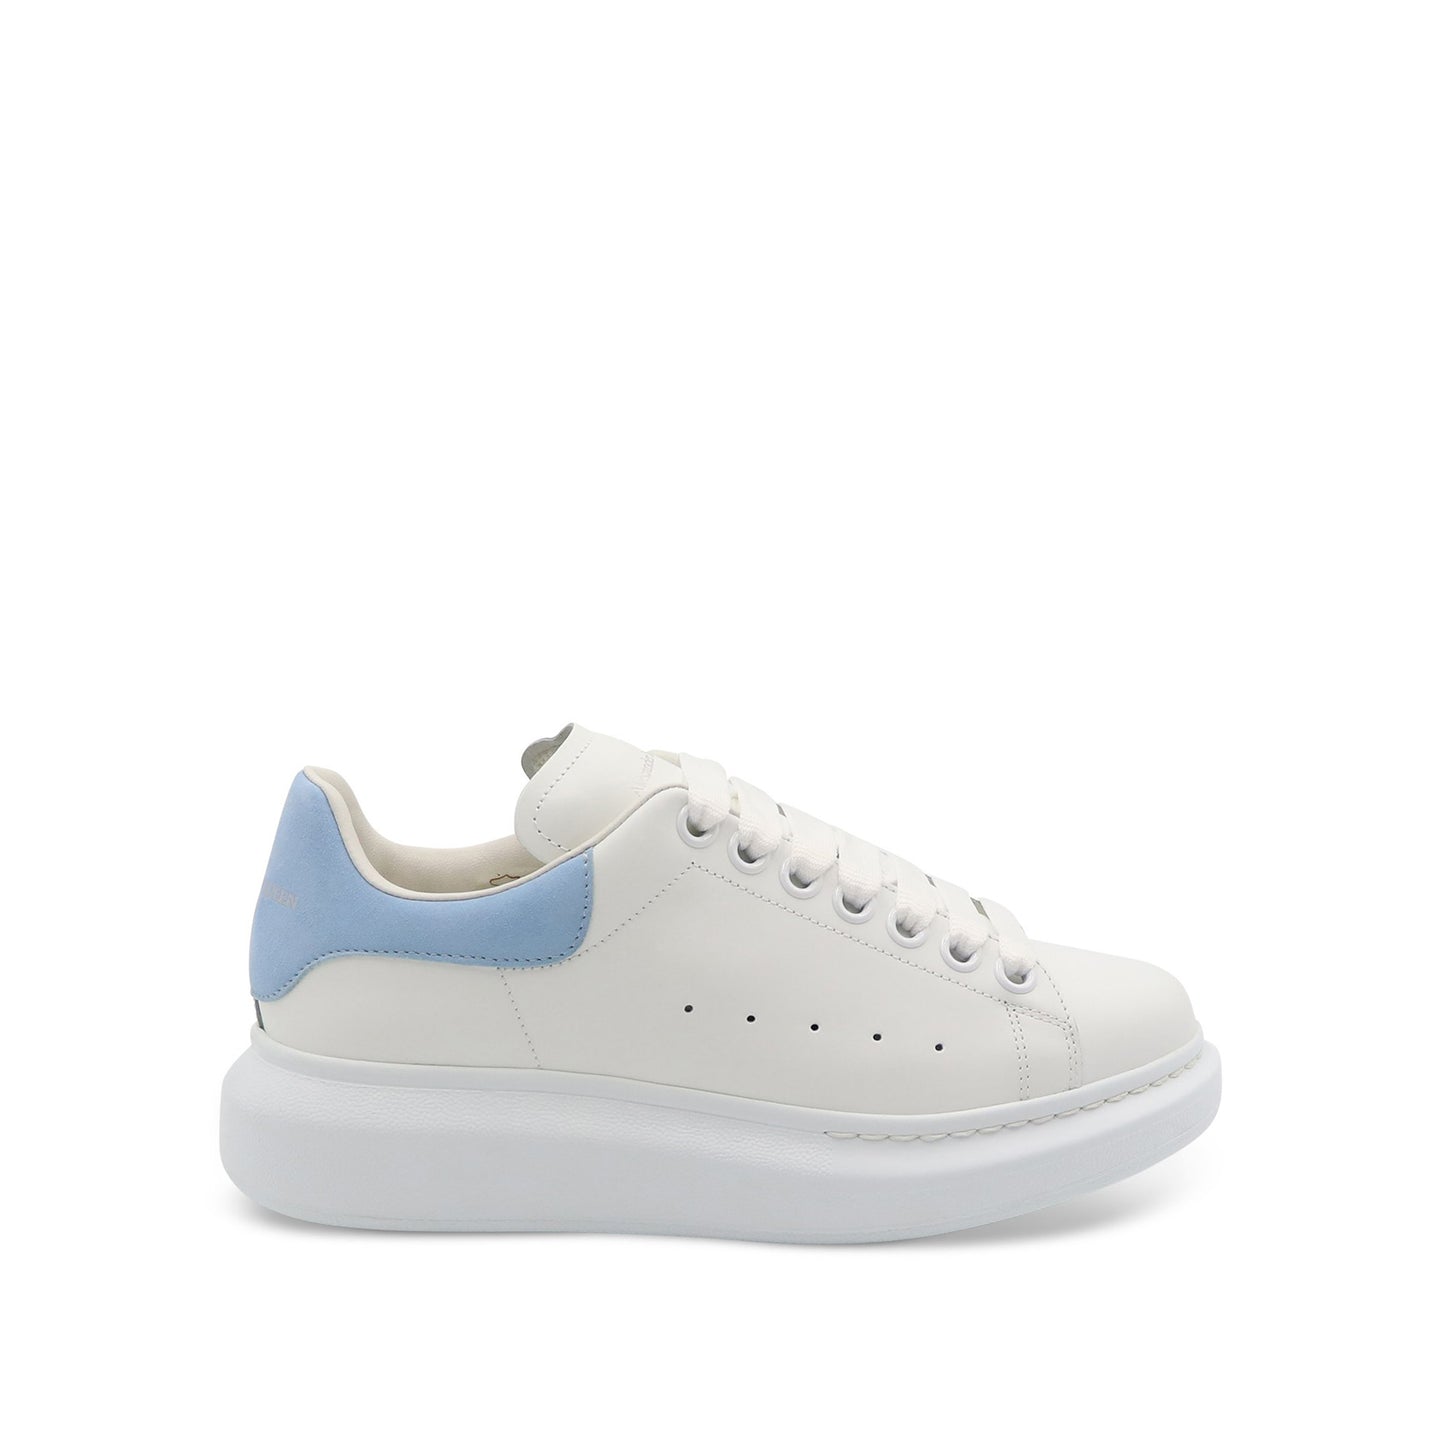 Larry Oversized Sneaker in White/Powder Blue